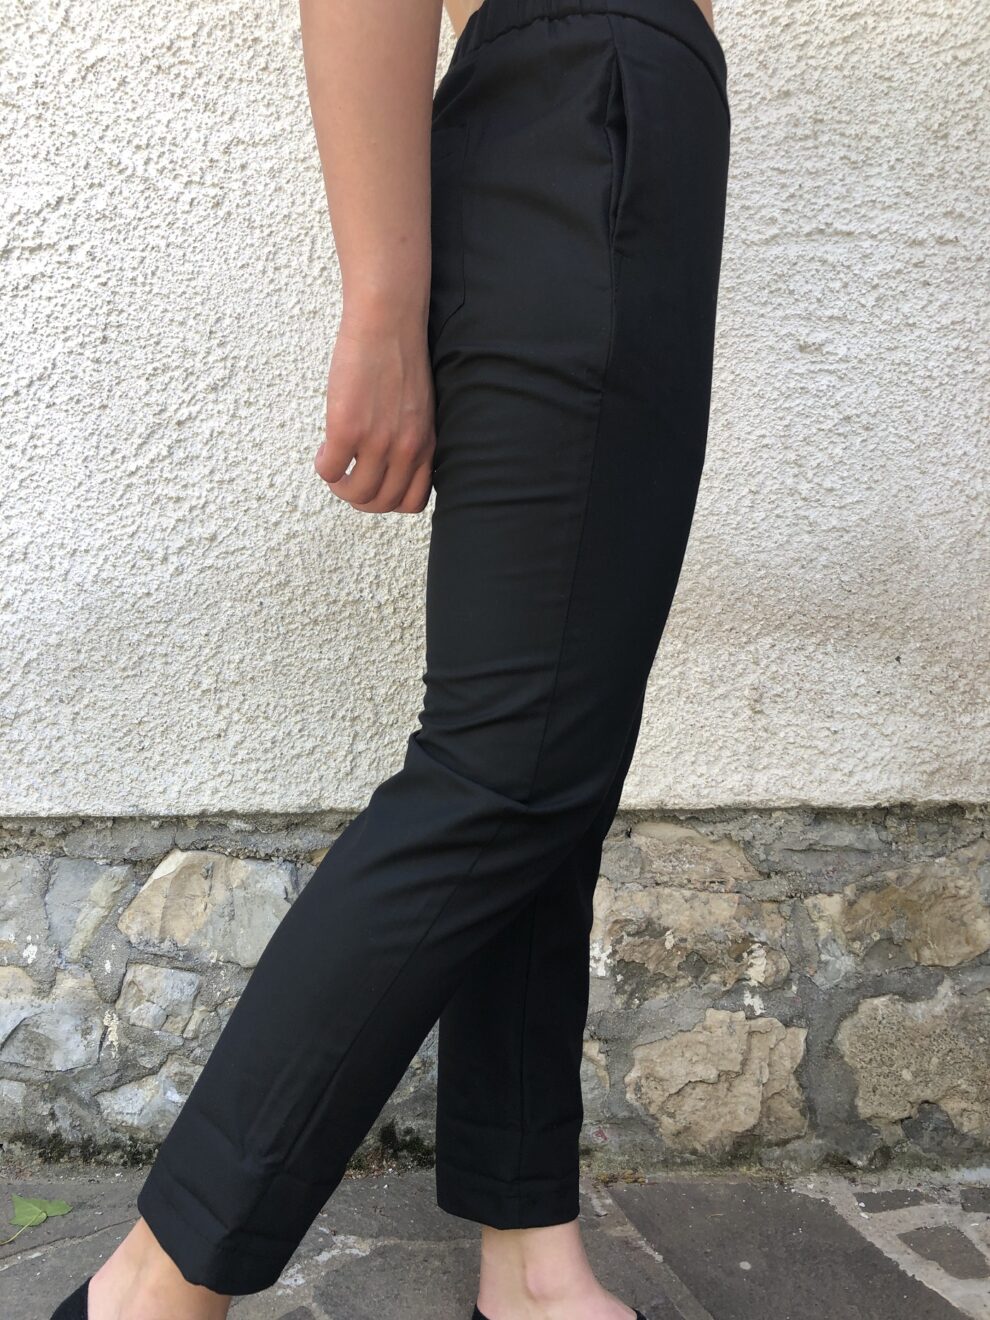 Pantalone Nero Nam particolare - tasca